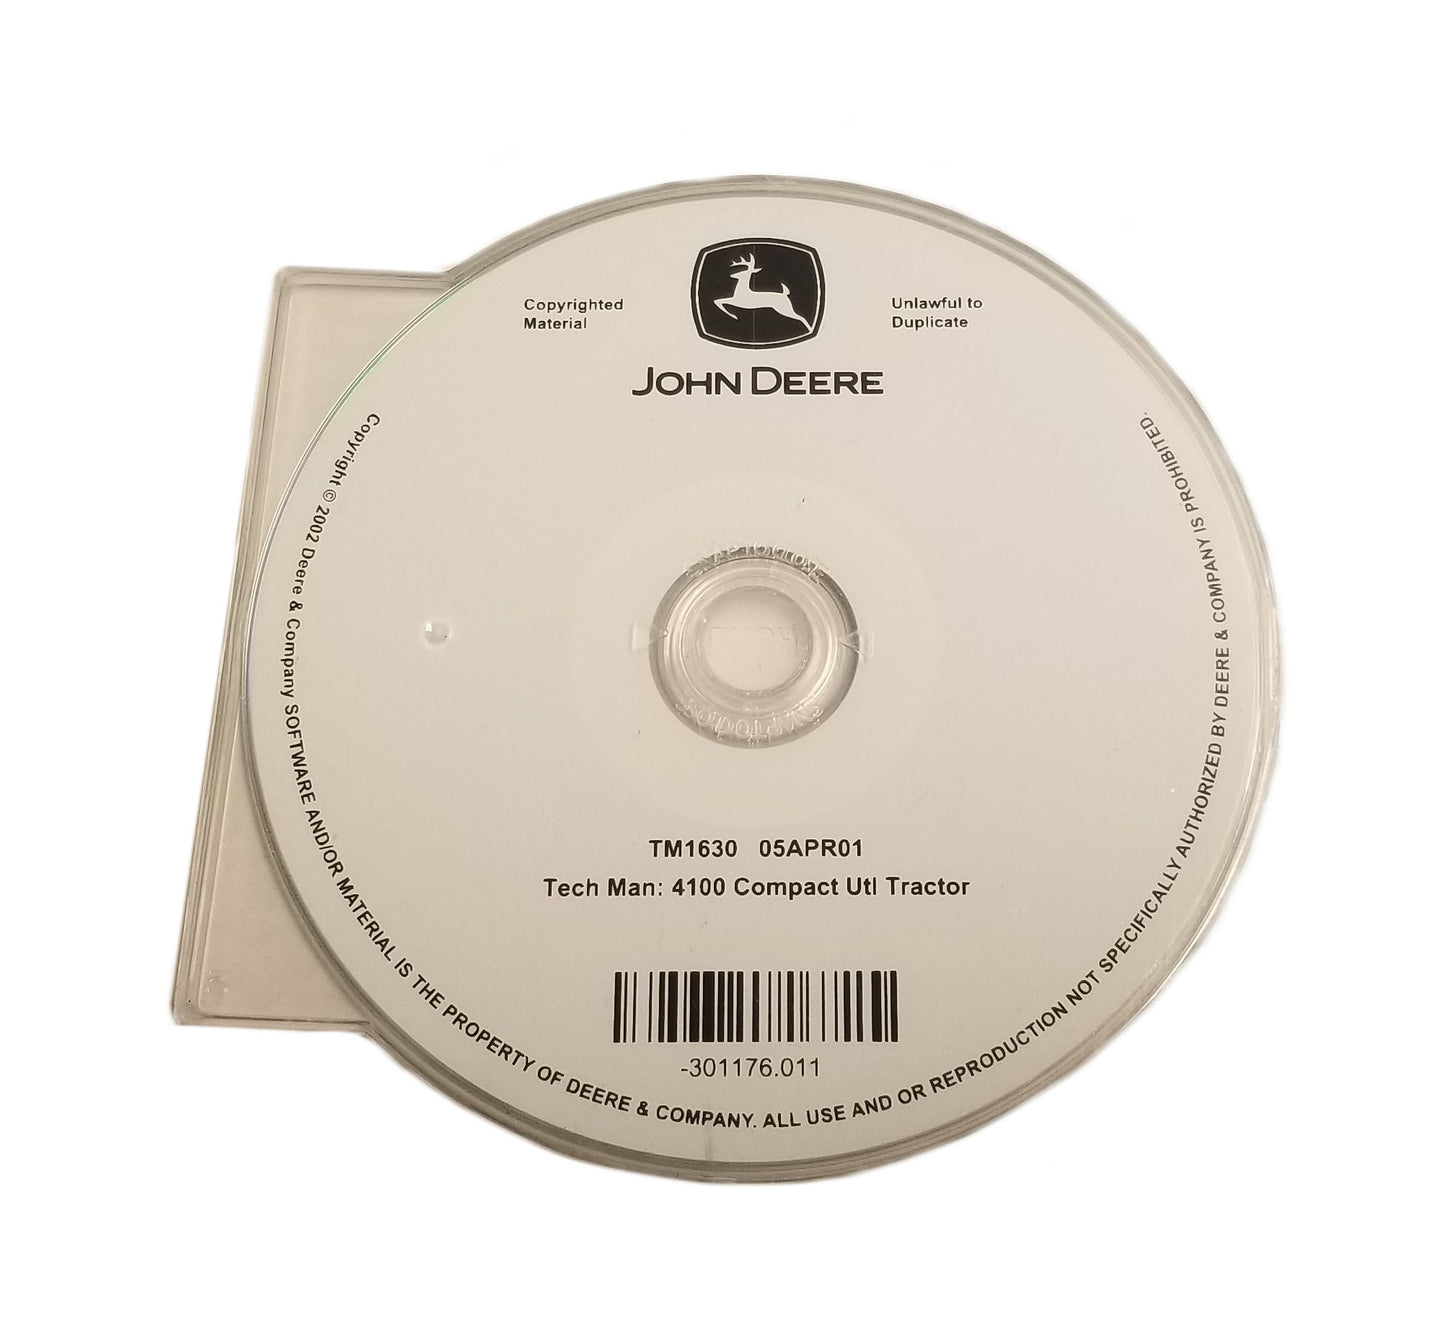 John Deere 4100 Compact Utility Tractor Technical Manual CD - TM1630CD